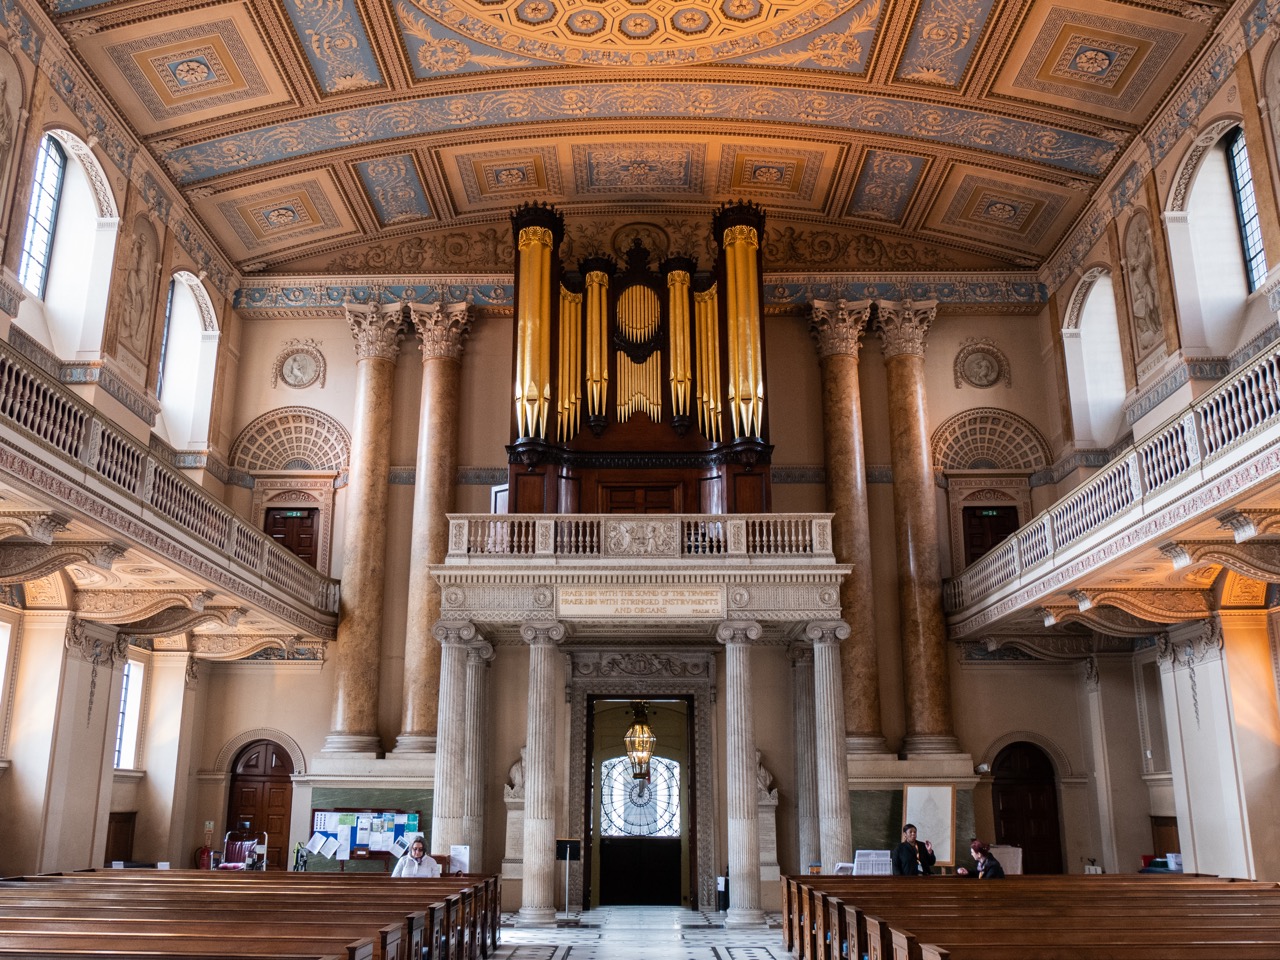 Interior view towards the organ gallery